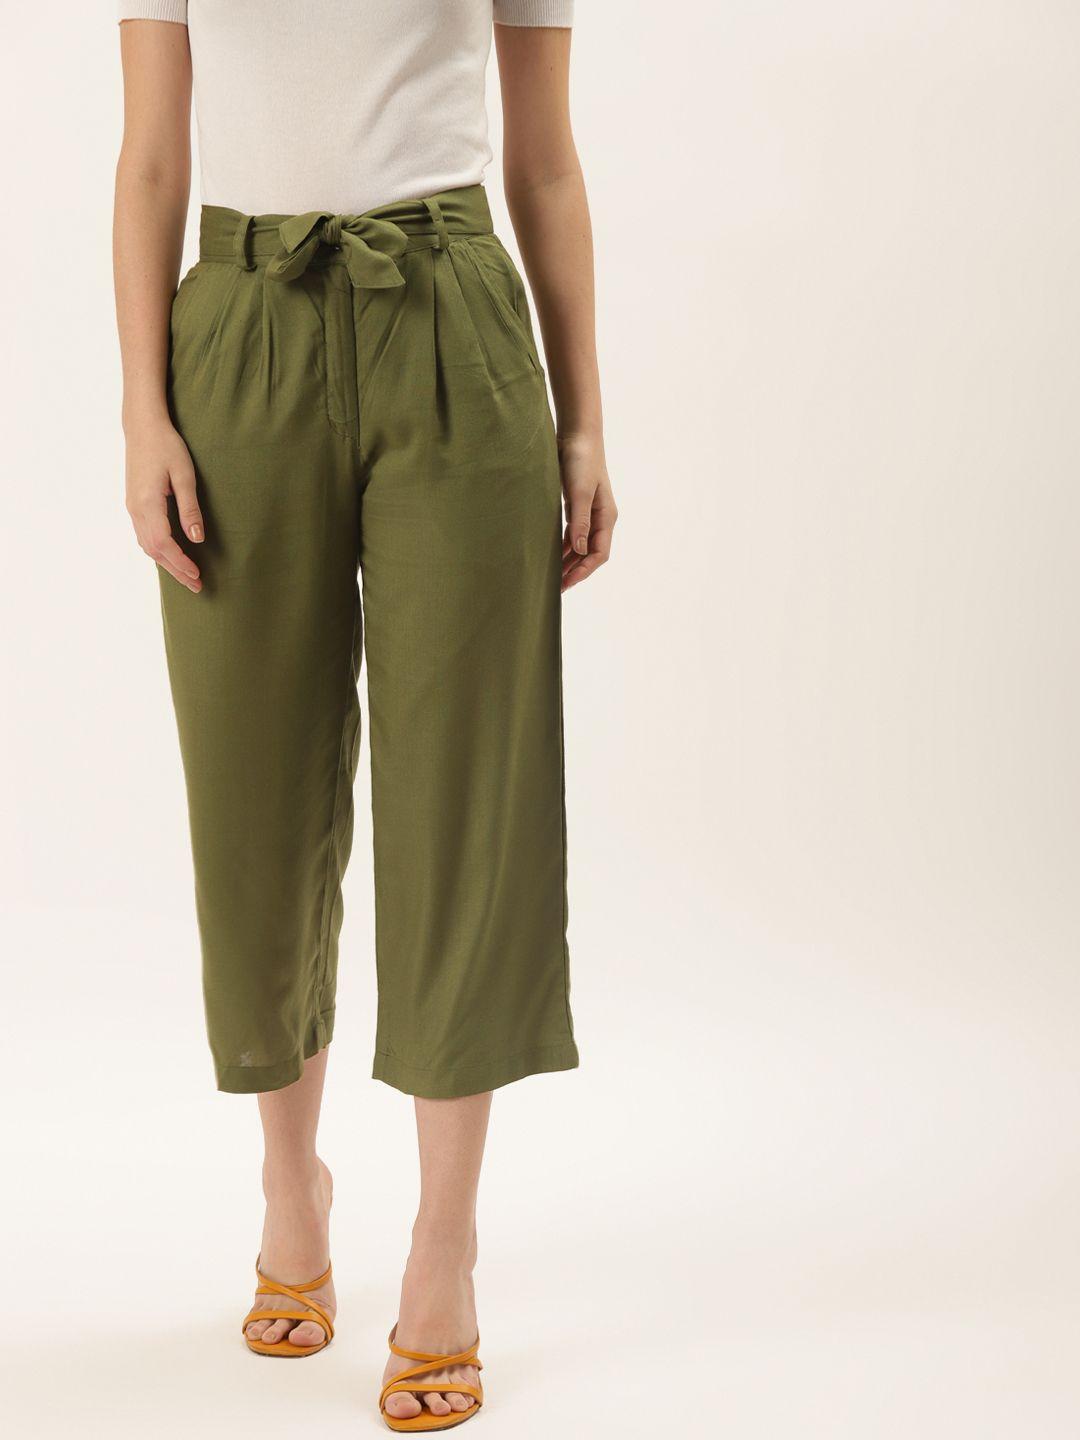 alsace lorraine paris women olive green smart pleated culottes trousers